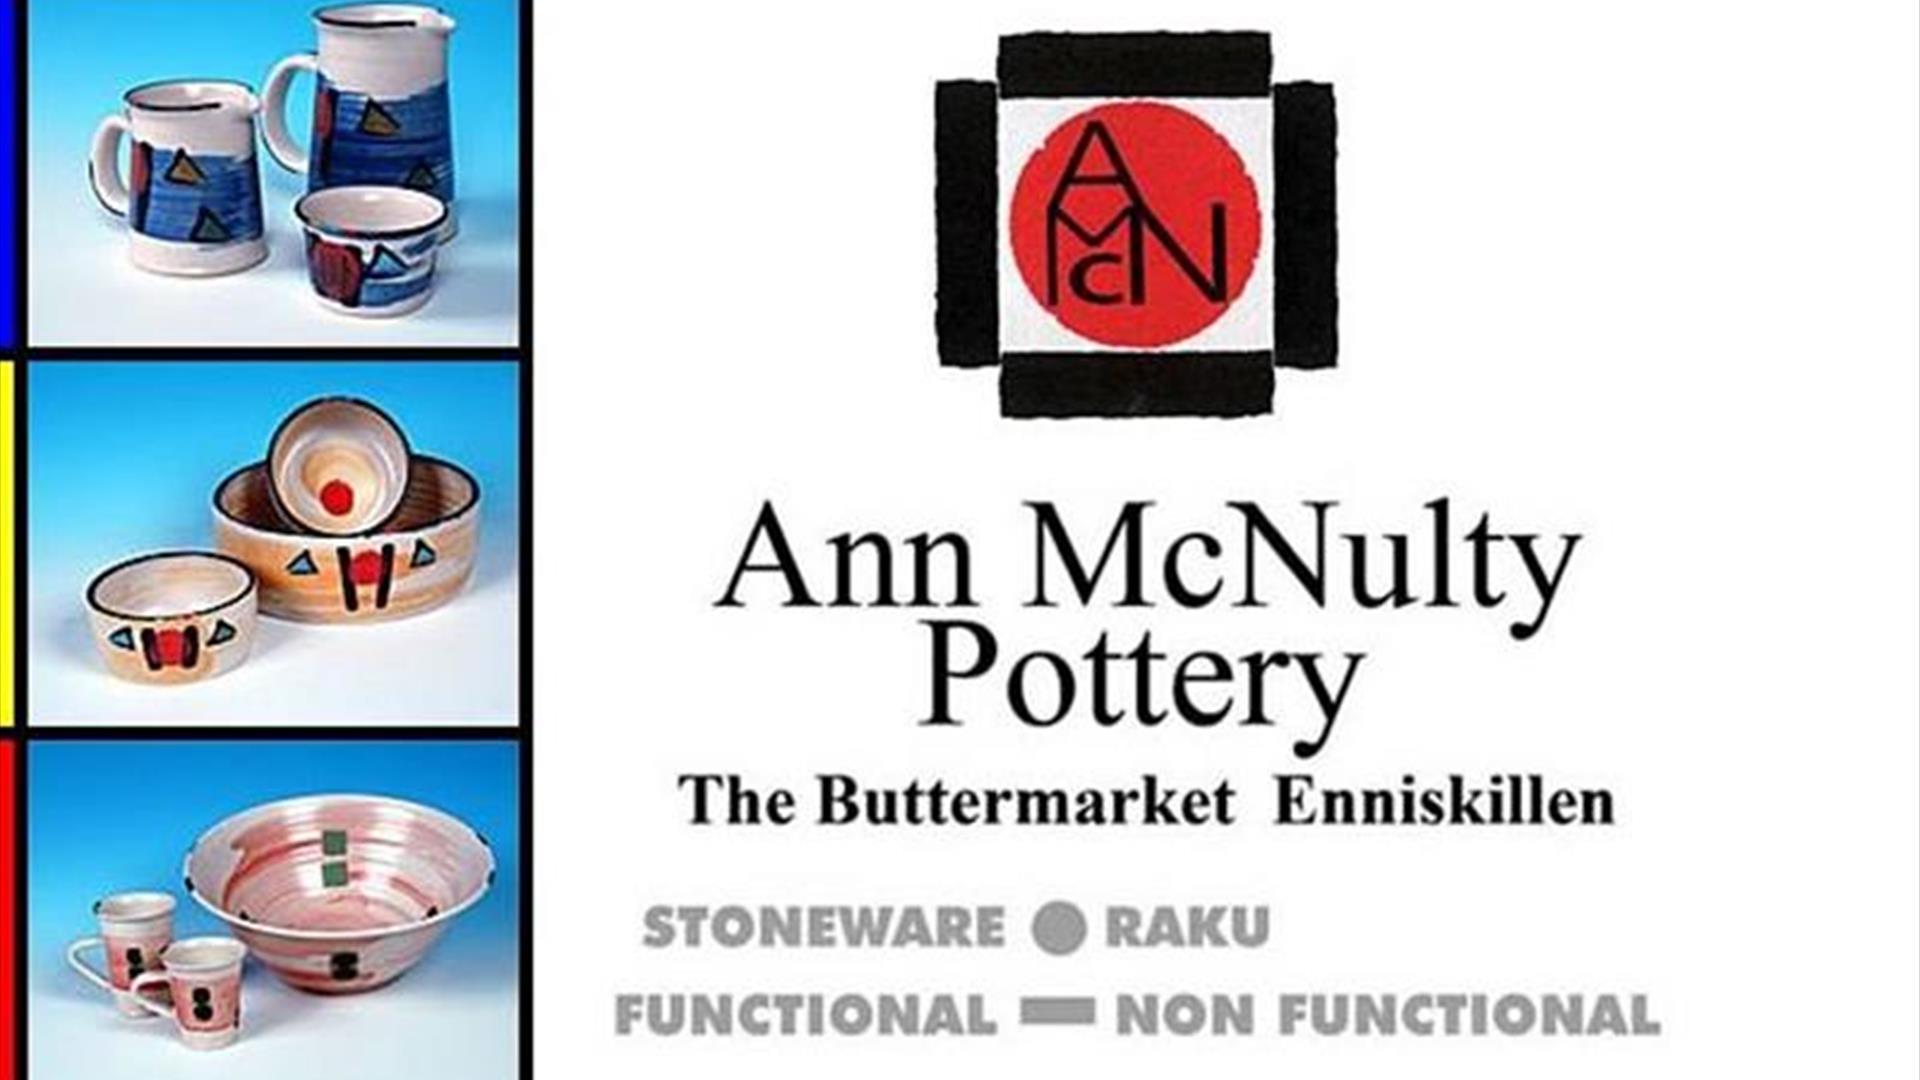 Ann McNulty Pottery